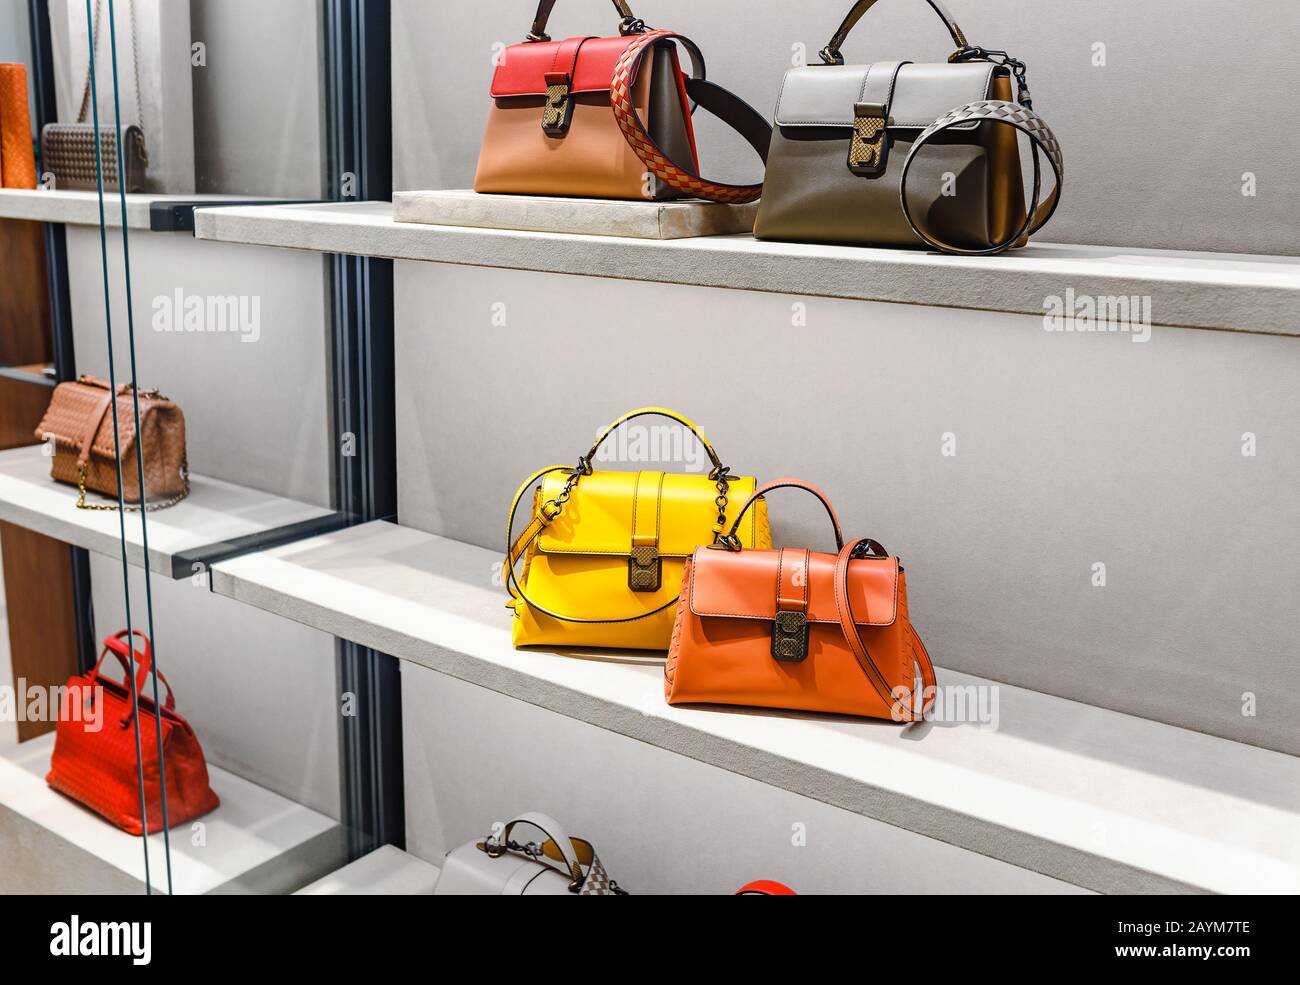 display luxury bag collection